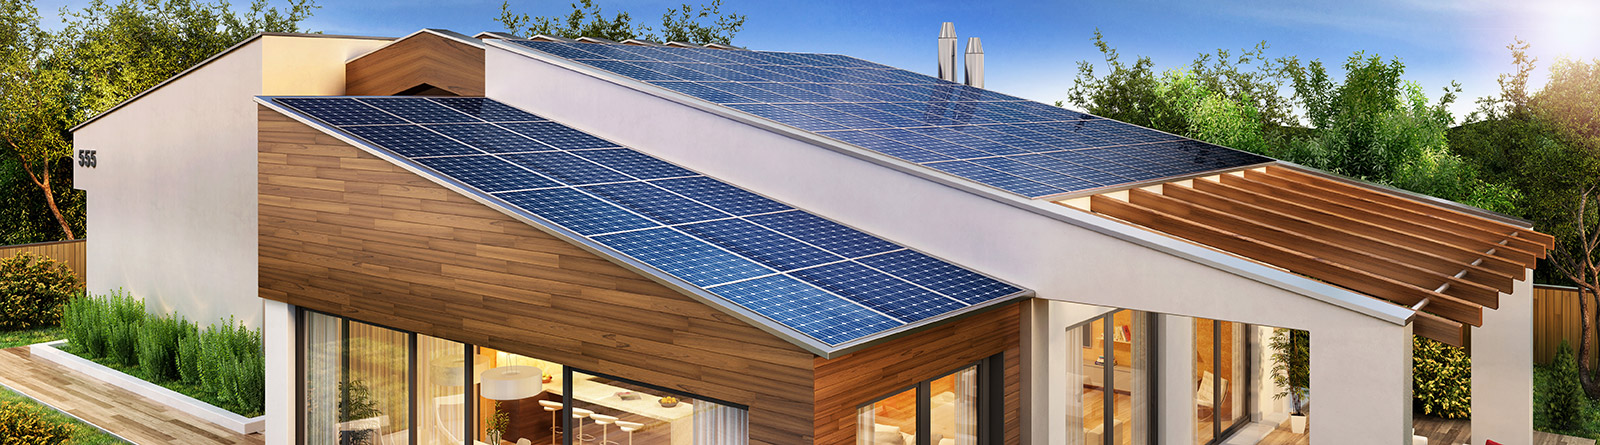 Renewable Energy and Innovation - solar panels